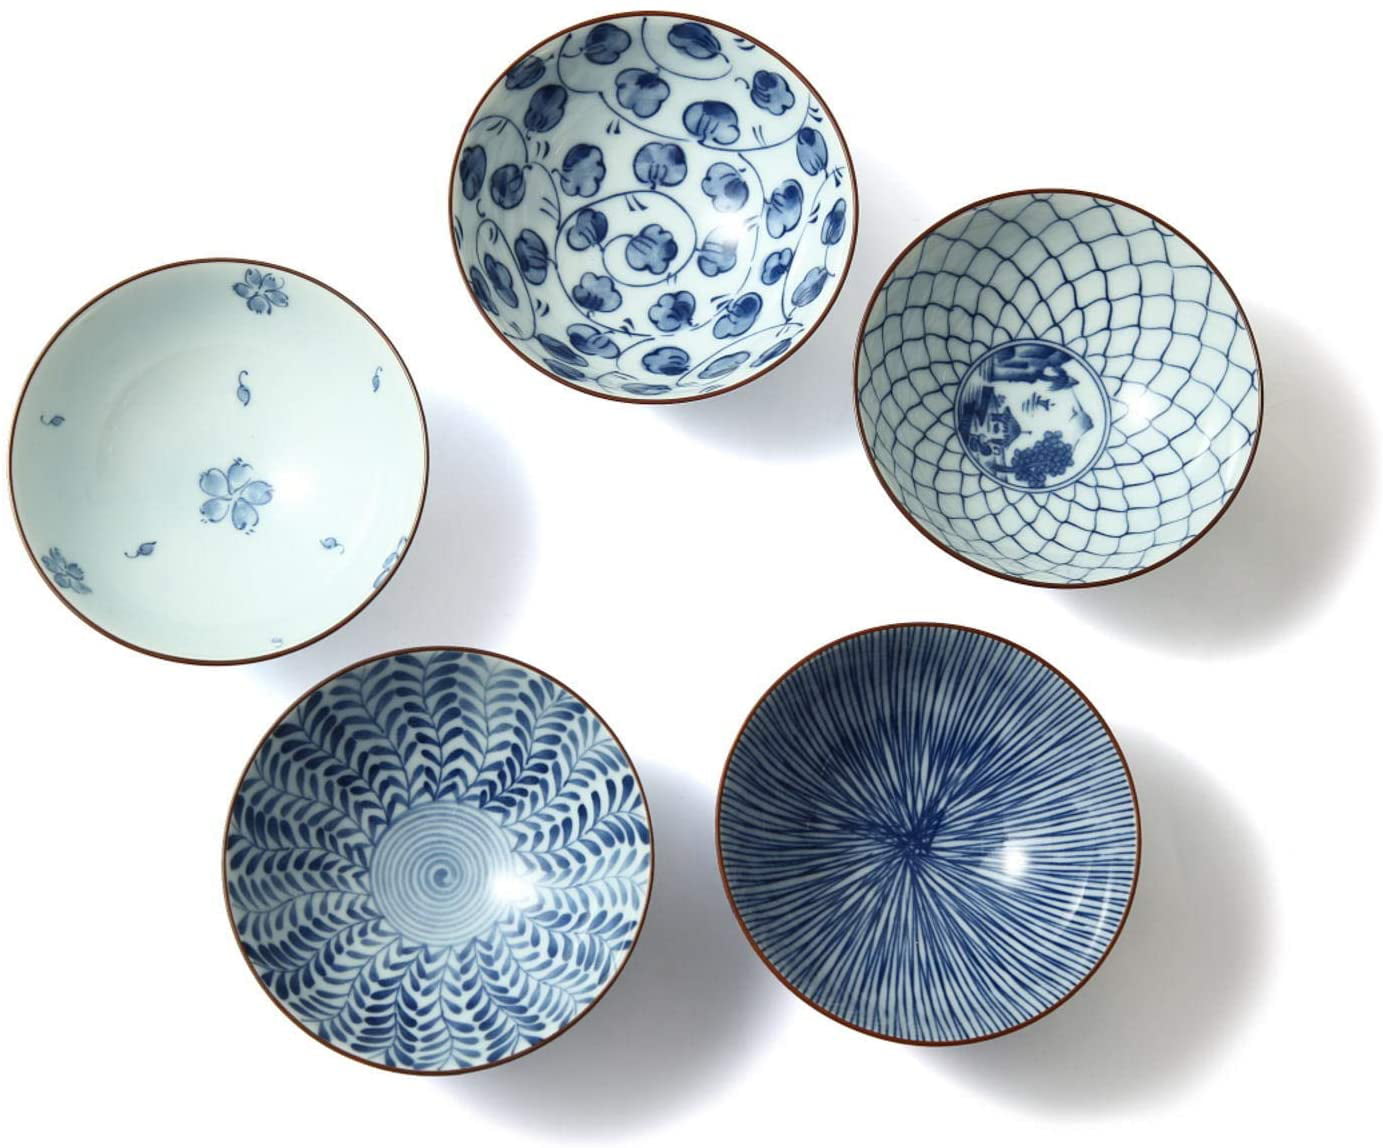 5 Small Bowls Set Saikai Pottery Japanese Ceramic Japanese Style Small Bowls Set from Japan 13033 